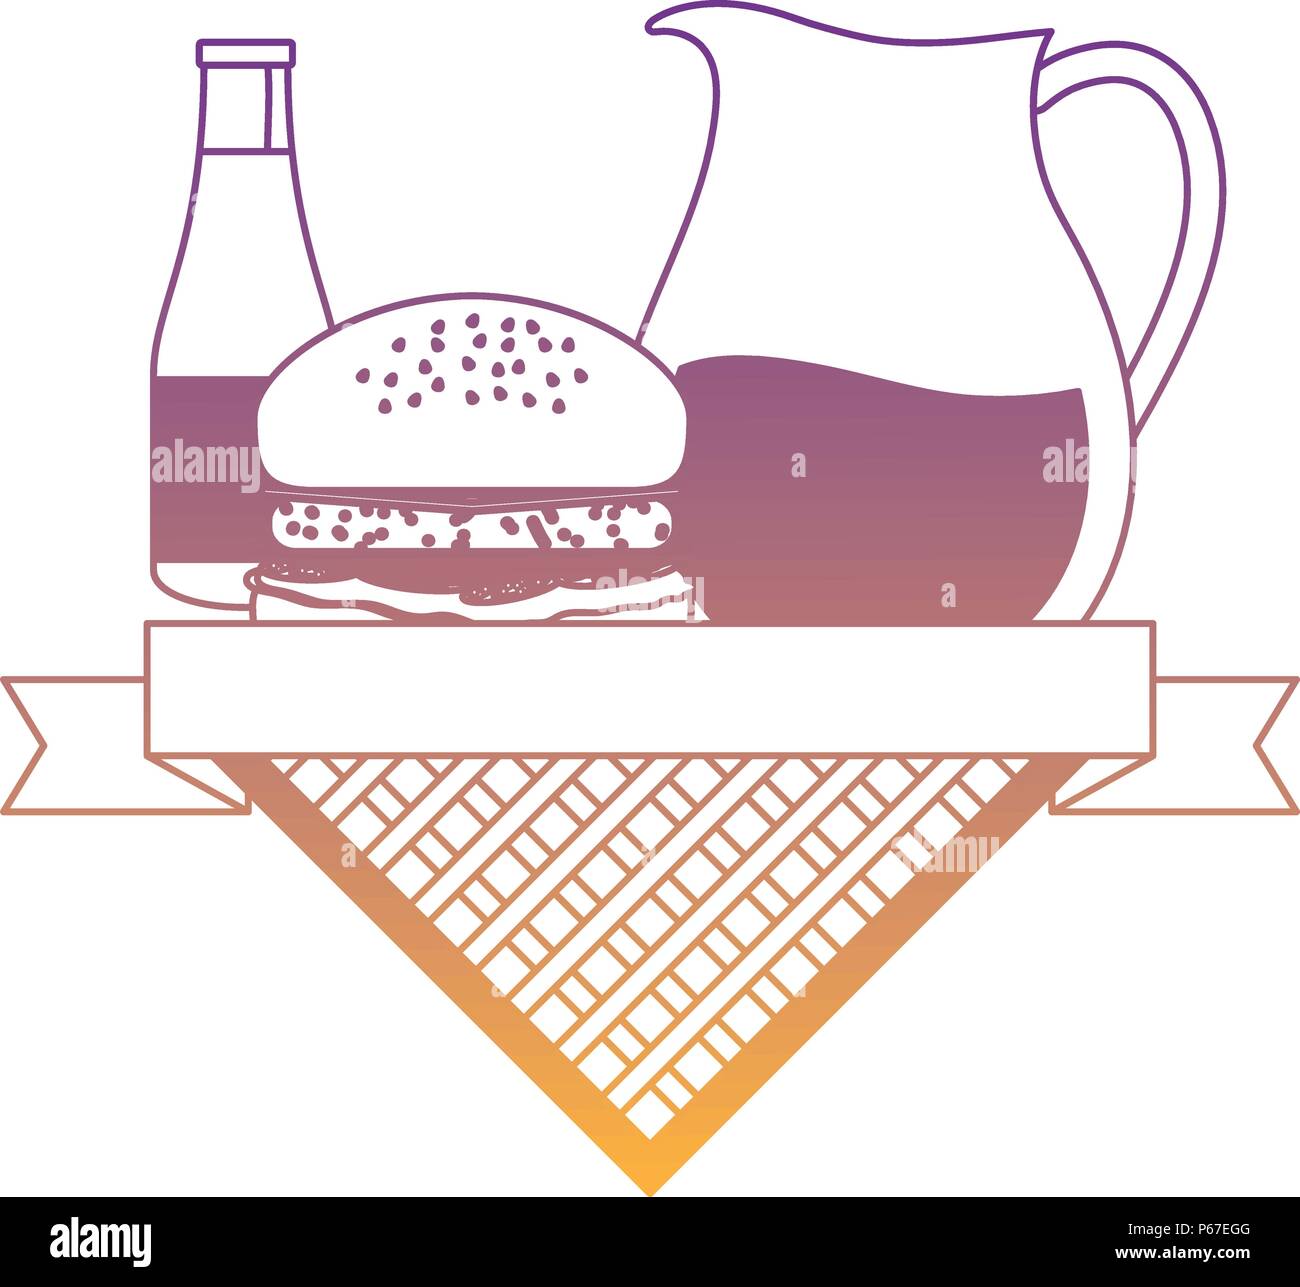 https://c8.alamy.com/comp/P67EGG/picnic-emblem-with-hamburger-and-lemonade-pitcher-icon-over-white-background-vector-illustration-P67EGG.jpg